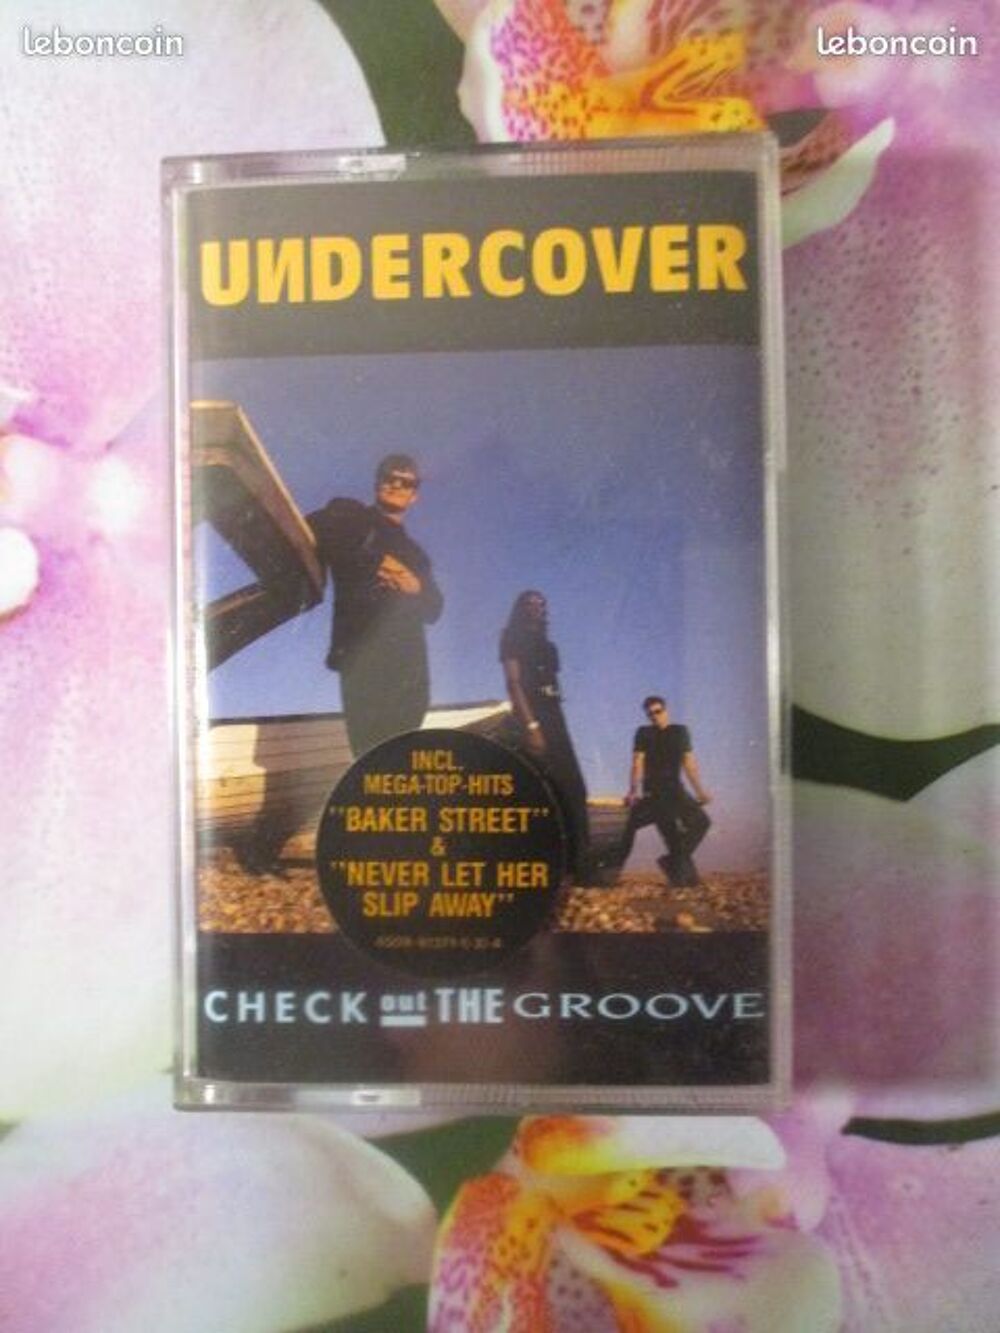 Cassette audio Undercover CD et vinyles